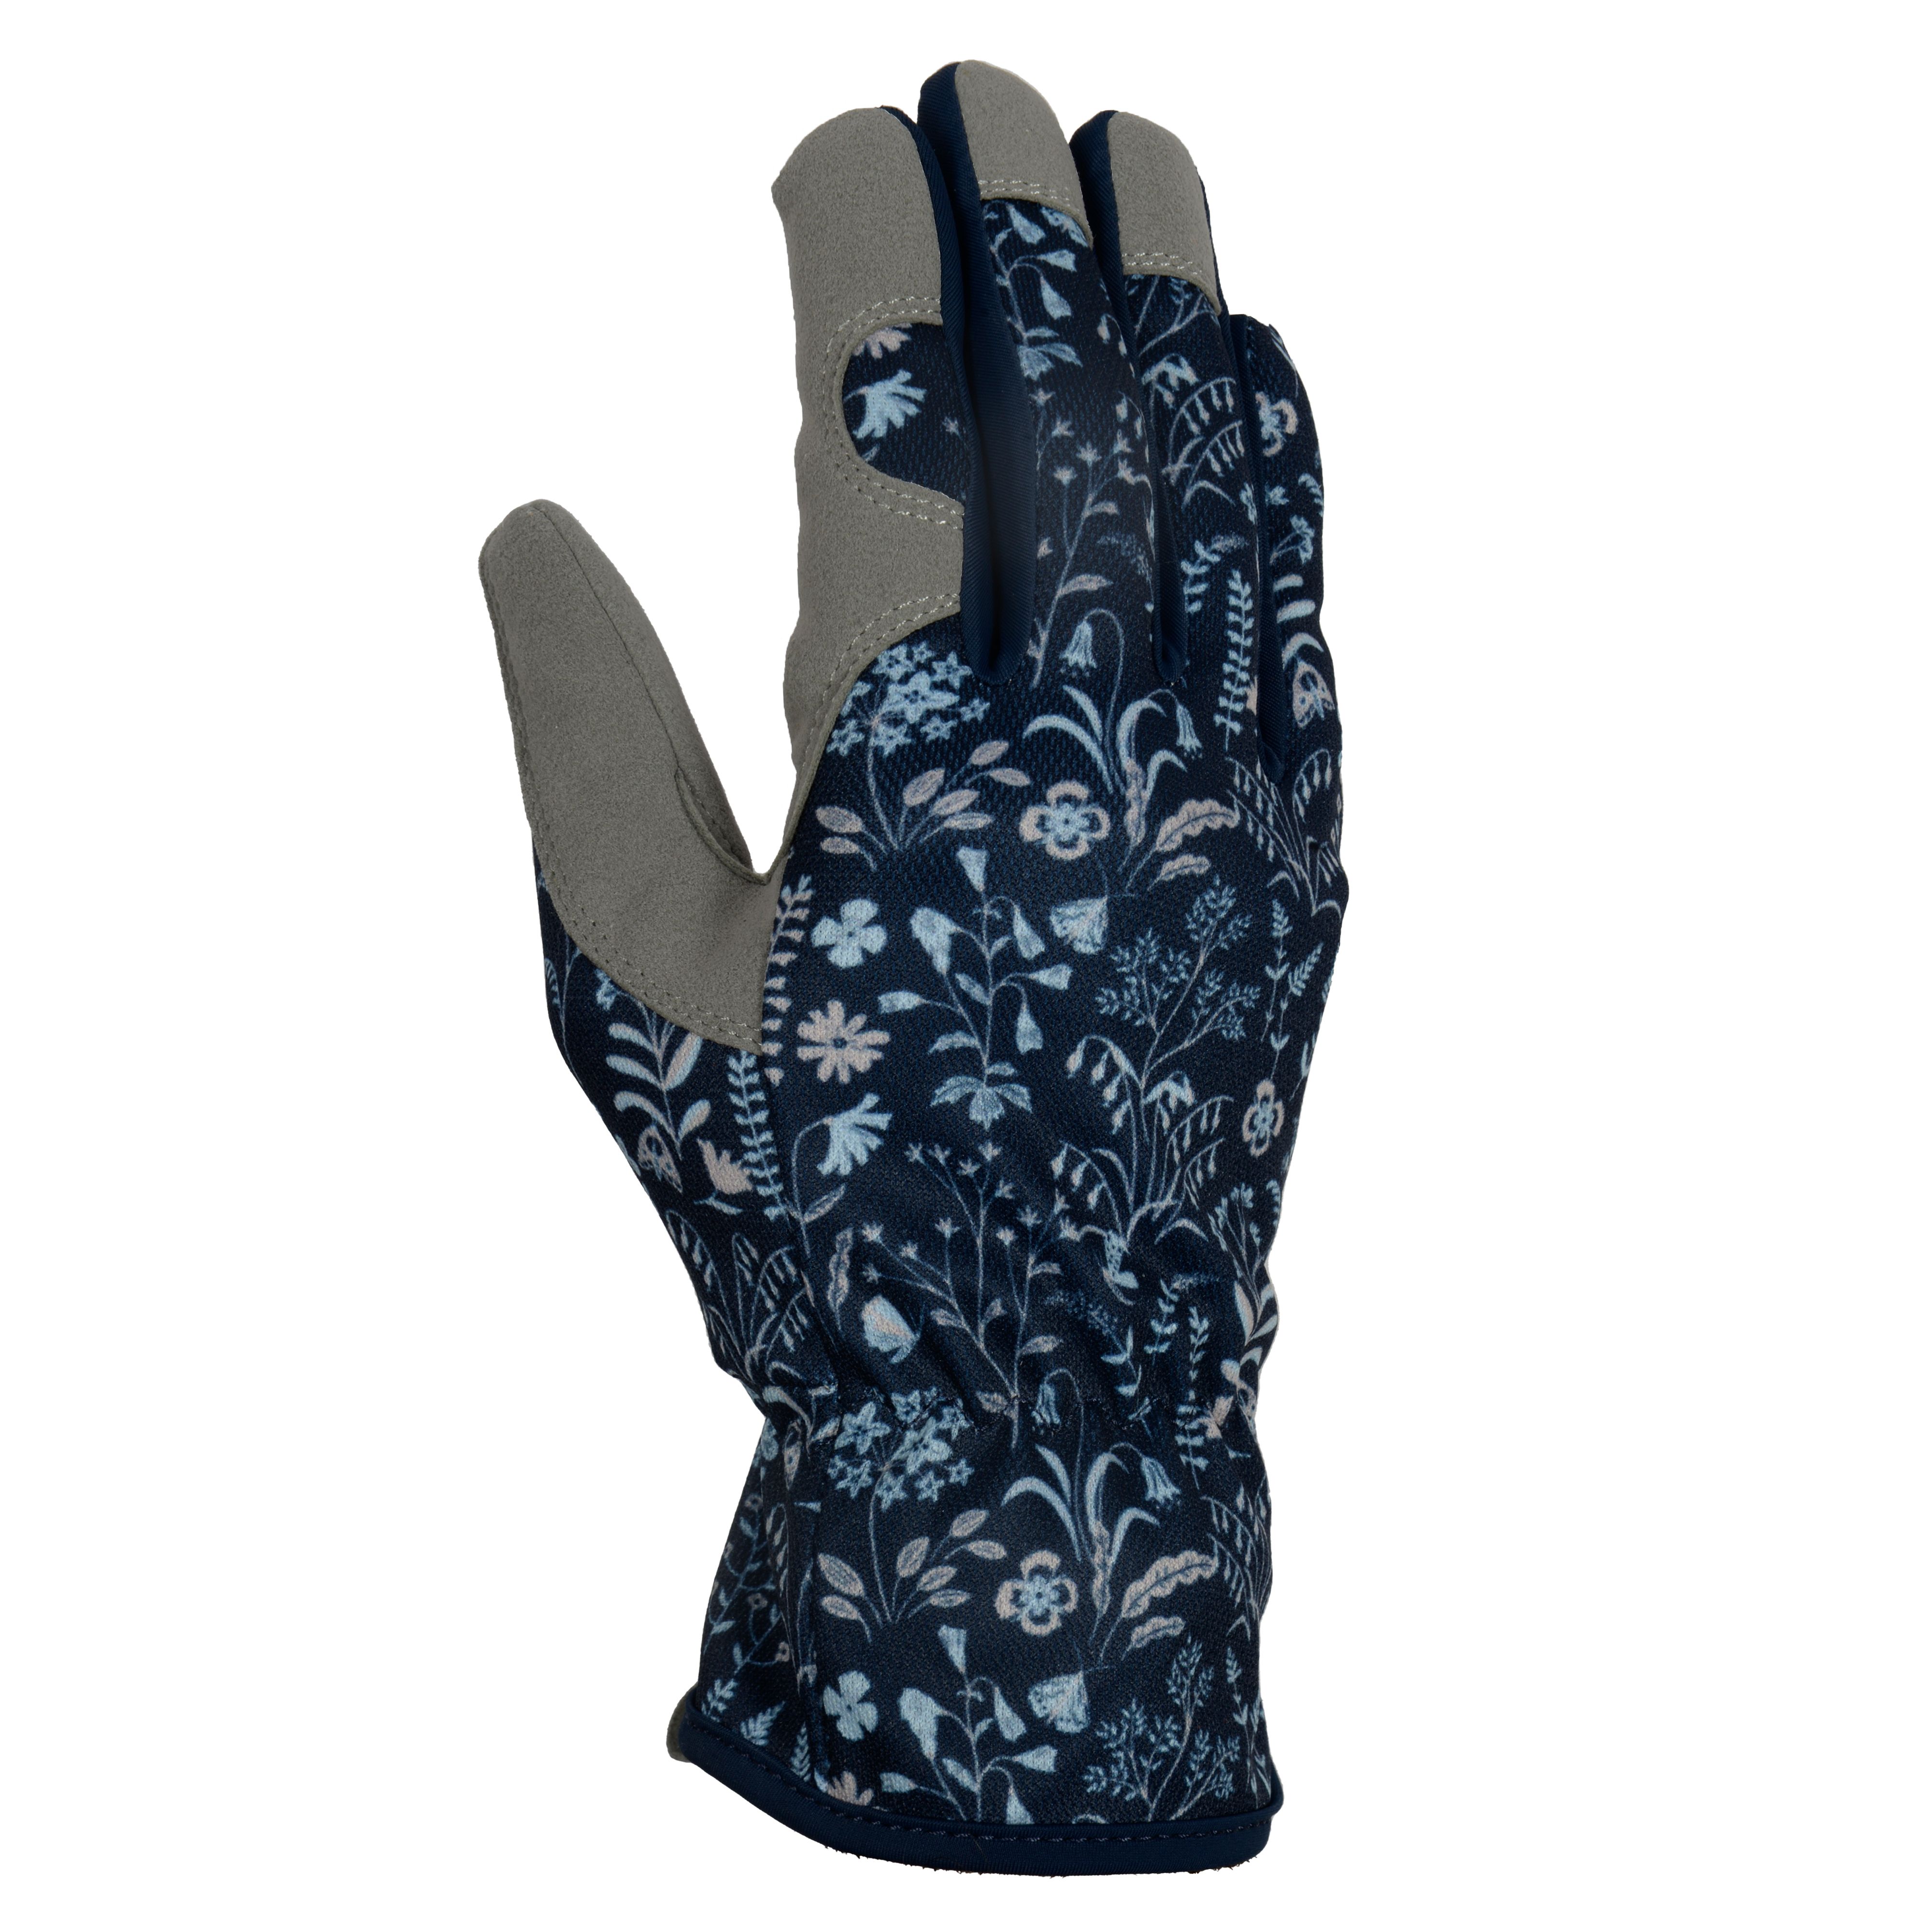 Verve Polyester Midnight Navy Gardening gloves Large, Pair